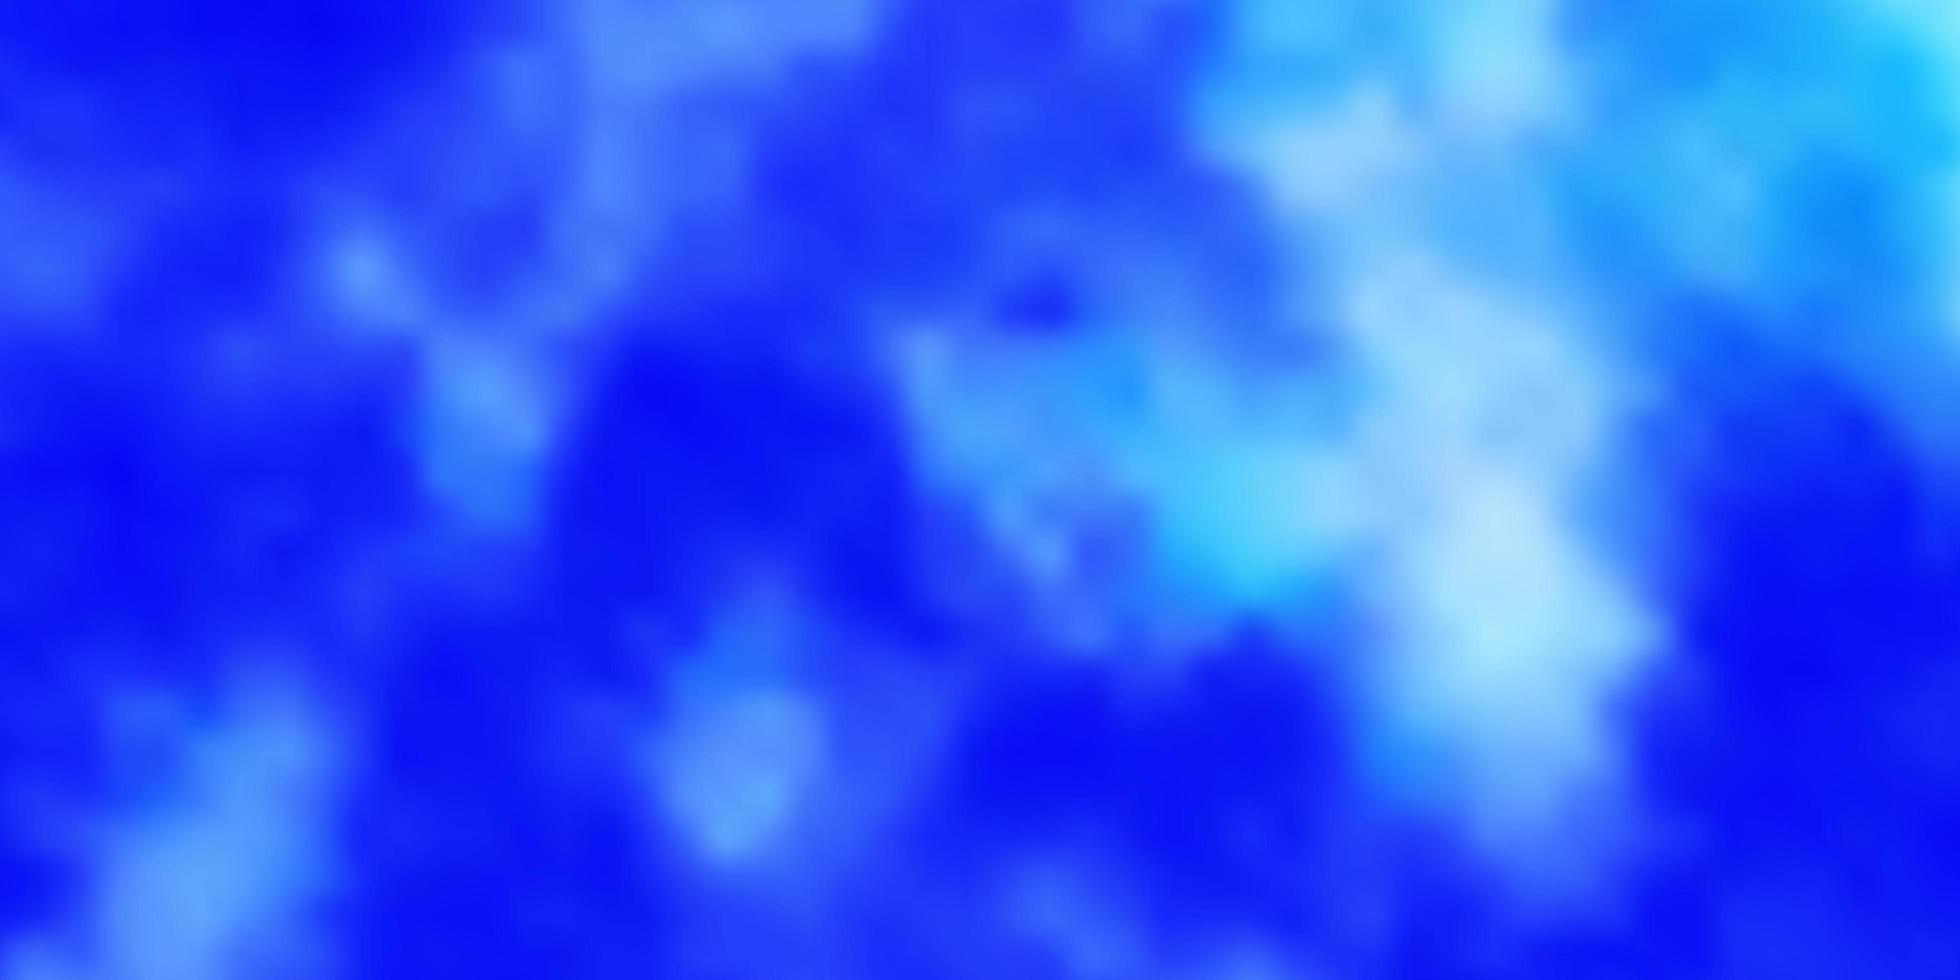 Light BLUE vector texture with cloudy sky